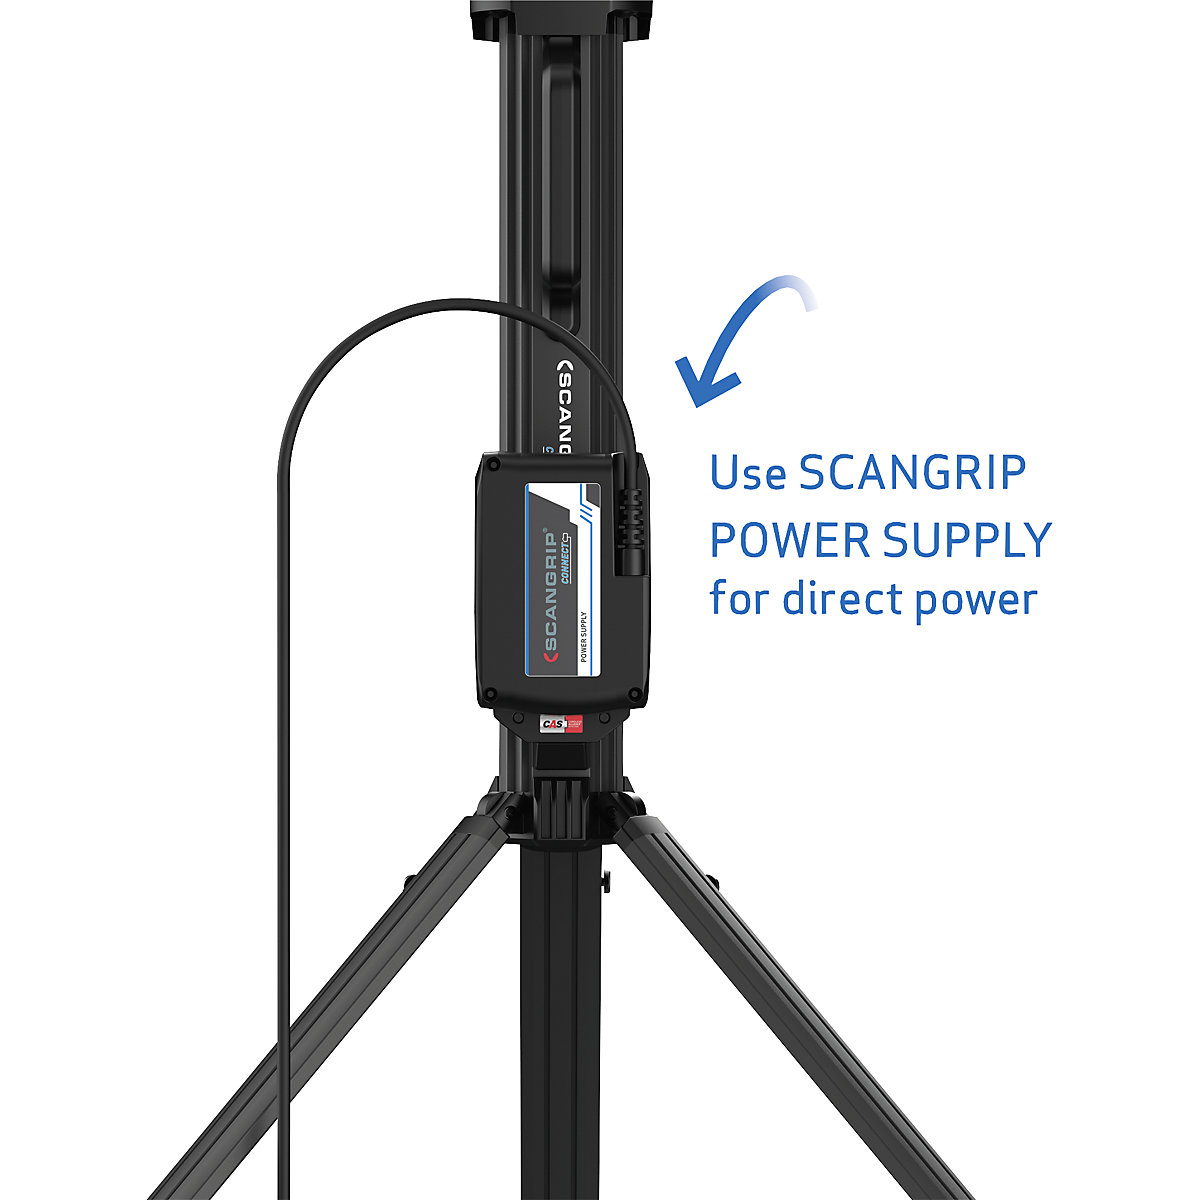 Građevinski LED reflektor TOWER 5 CONNECT – SCANGRIP (Prikaz proizvoda 25)-24